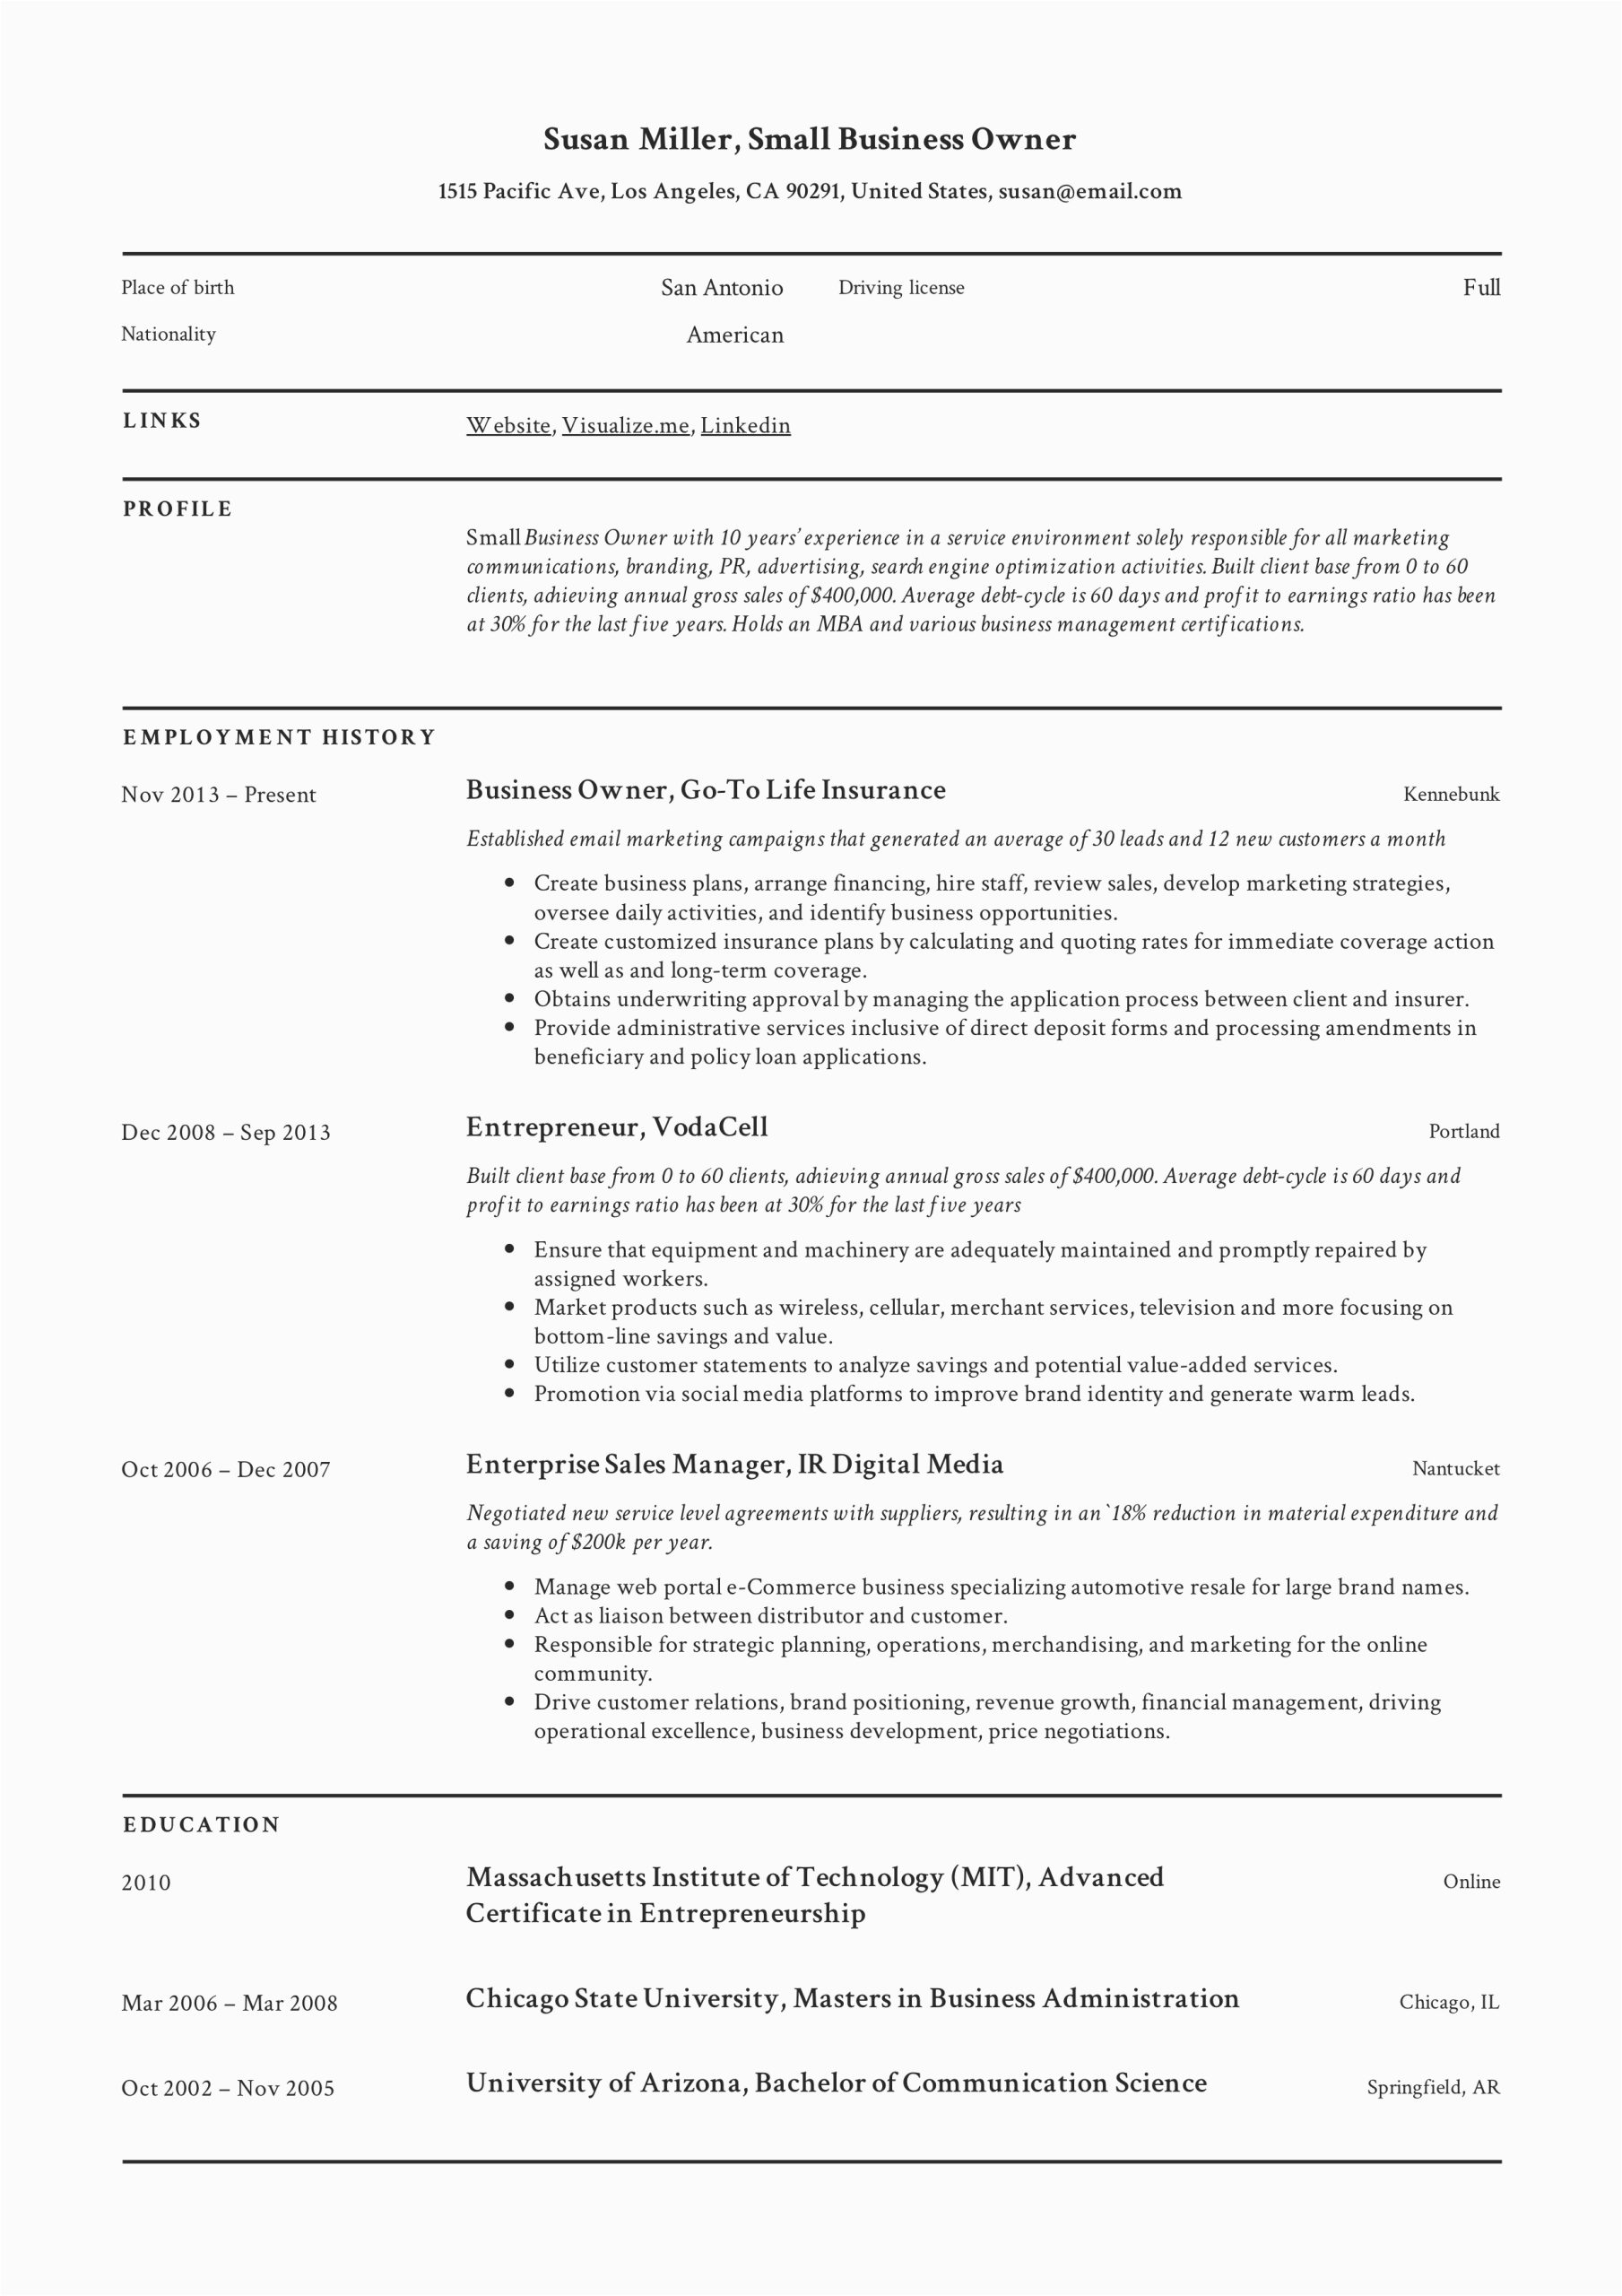 Small Business Owner Job Description Sample Resume Small Business Owner Resume Guide 12 Examples Pdf